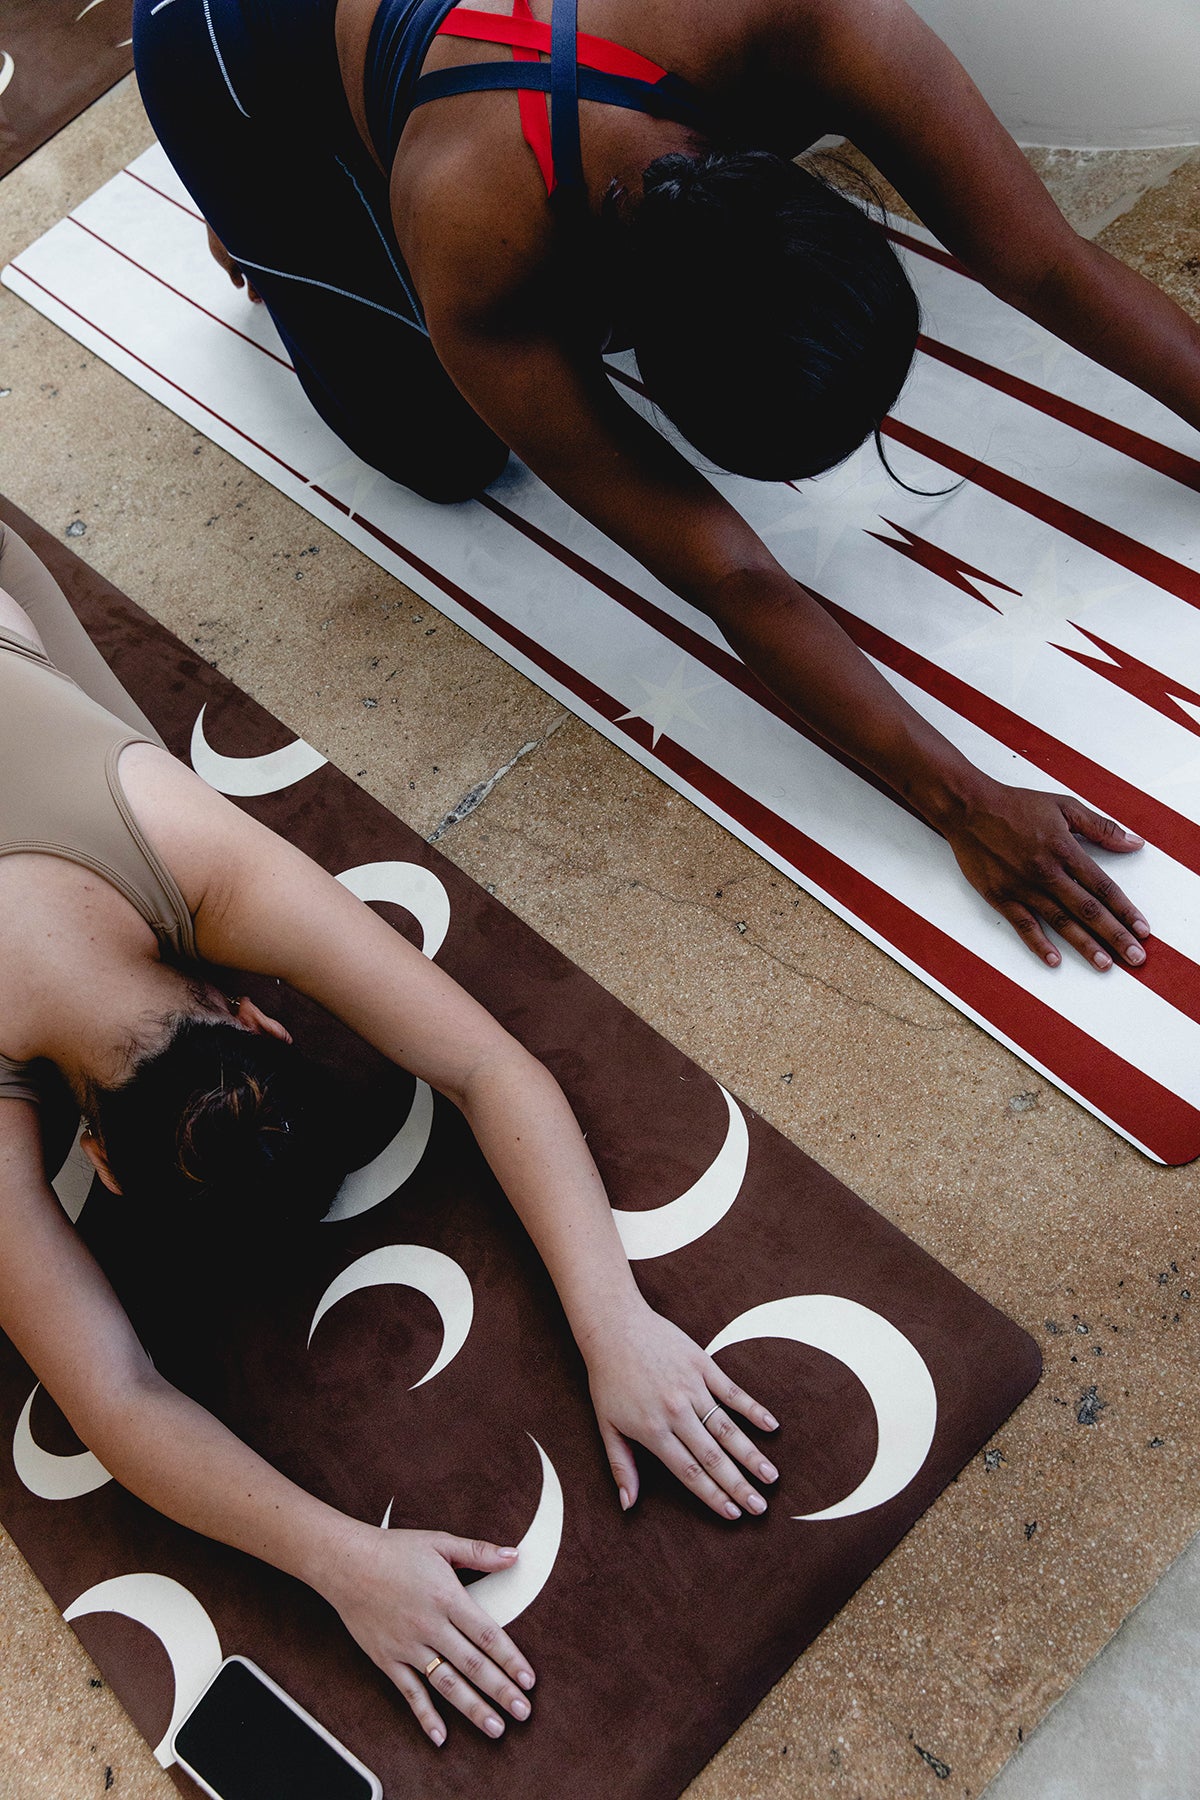 Women stretching on yoga mats